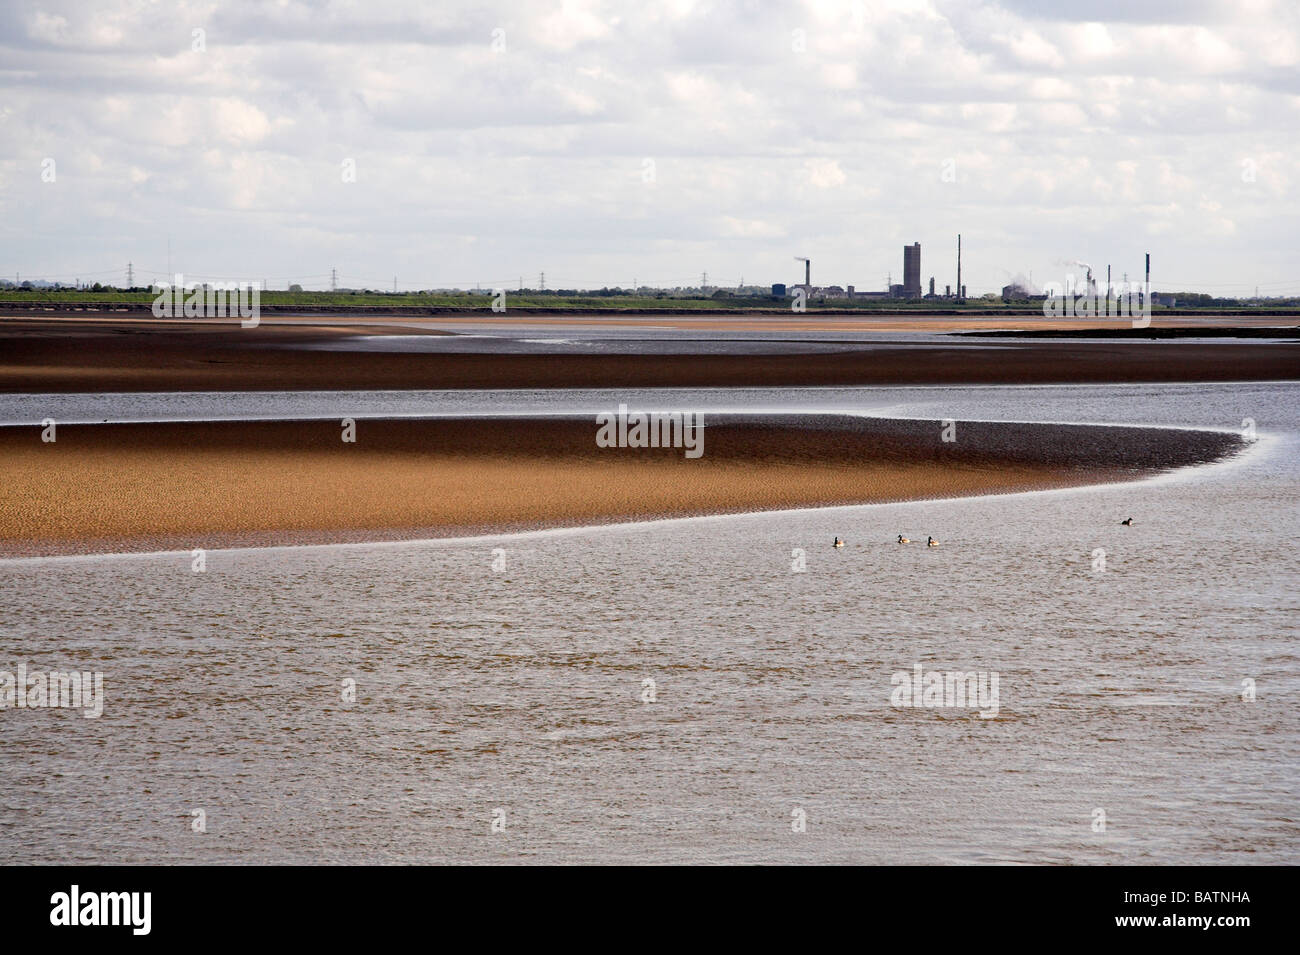 River Mersey Estuary, Widnes, Cheshire, UK Stock Photo